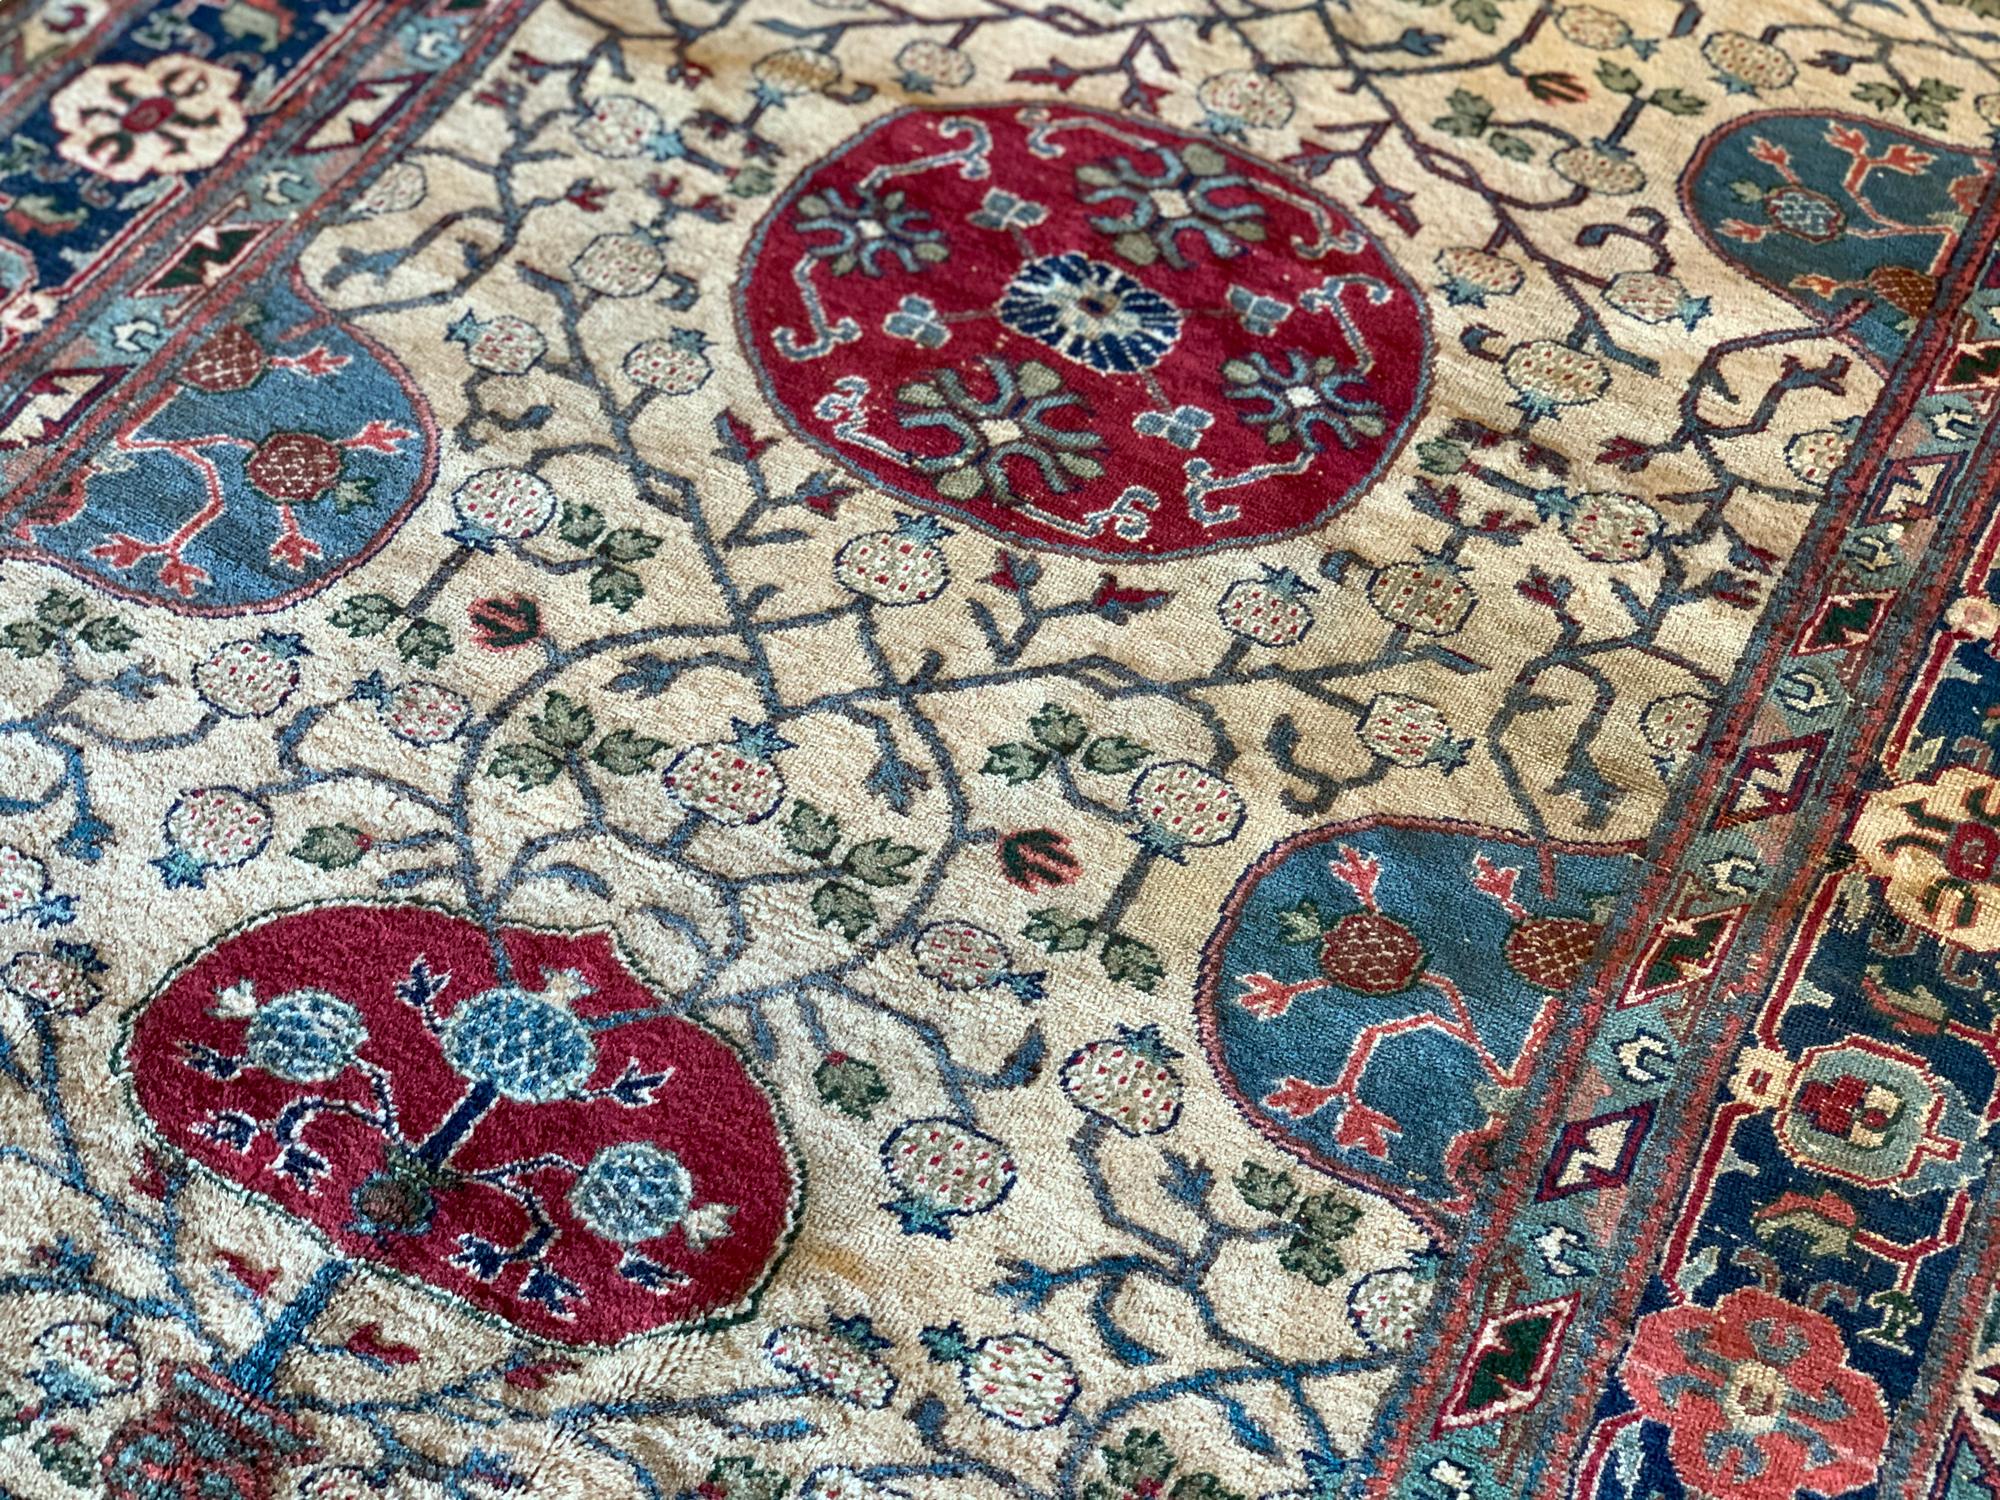 Vegetable Dyed Antique Rugs Central Asian Khotan Carpet Handmade Oriental Area Rug For Sale